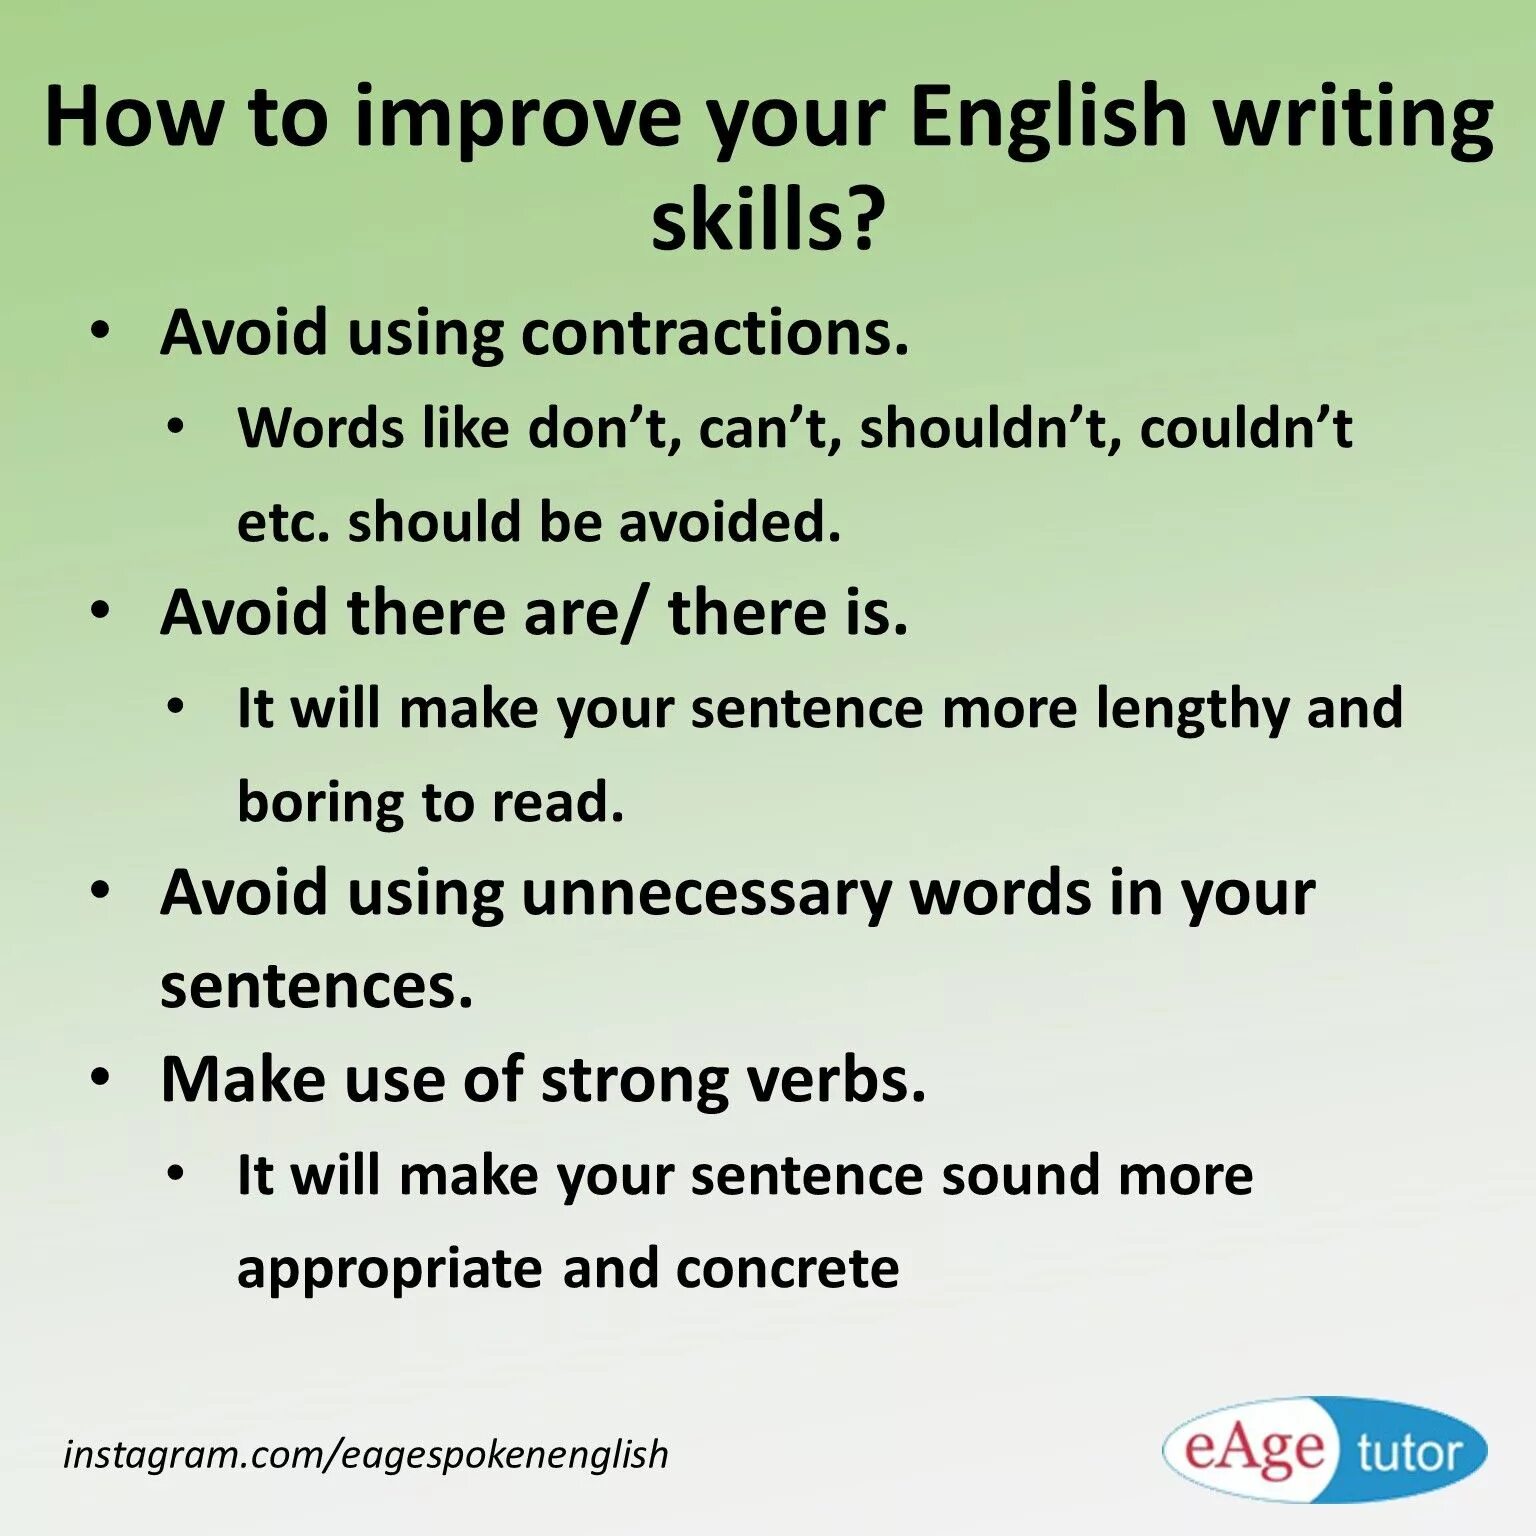 Improved speaking skills. How to improve writing skills. How to improve English skills. Improve your writing skills. How to improve English writing skills.